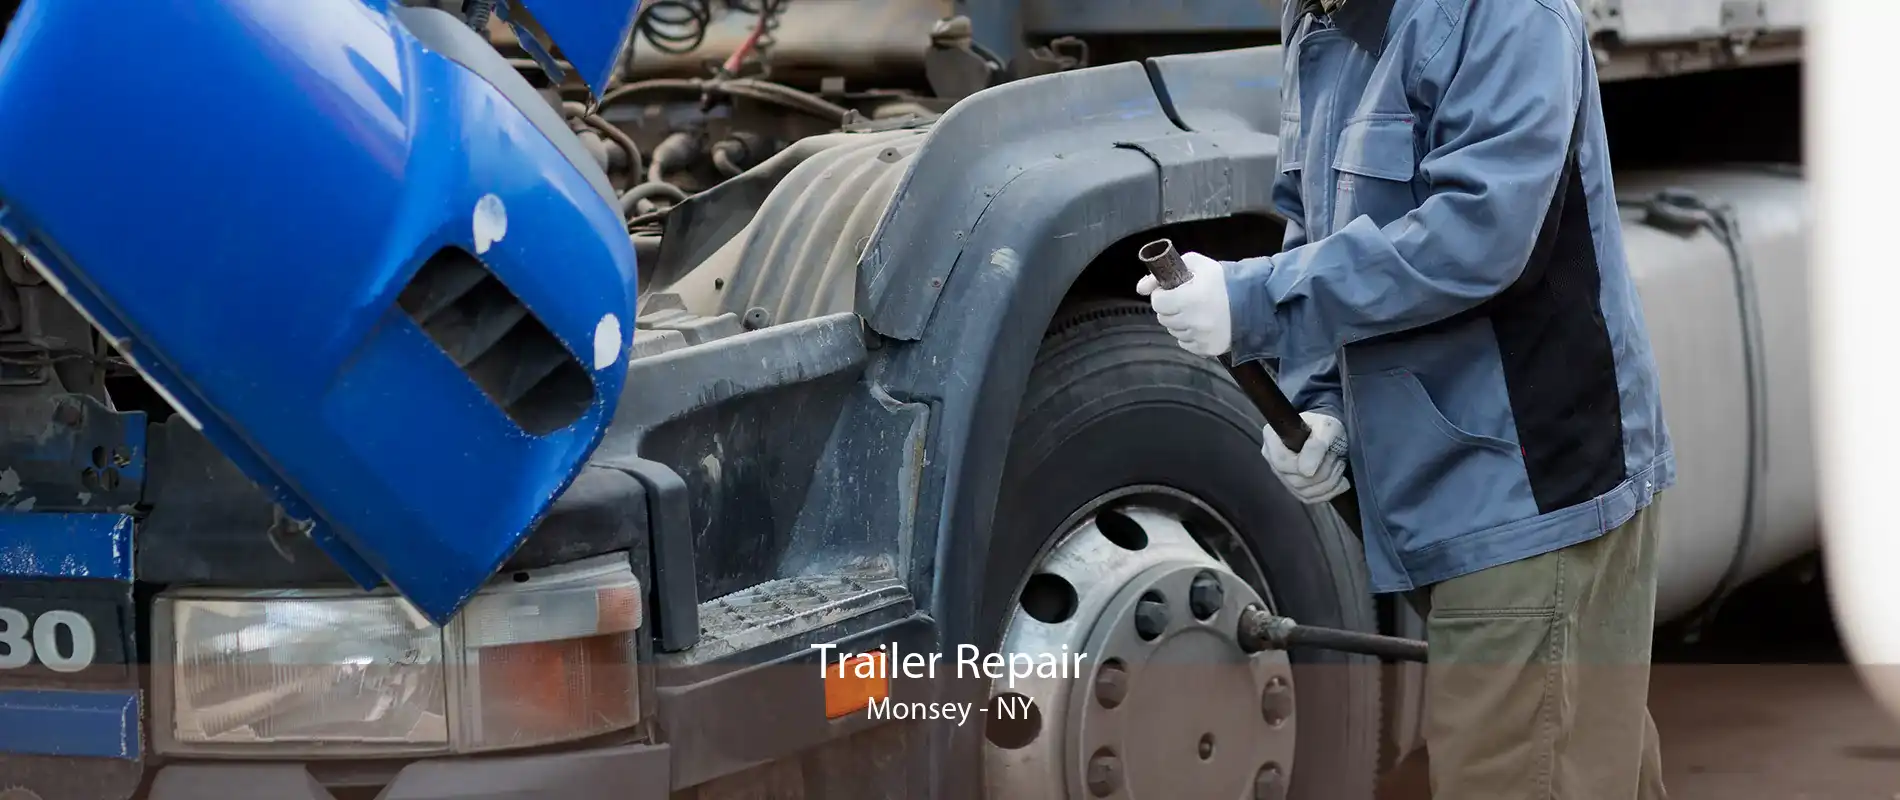 Trailer Repair Monsey - NY